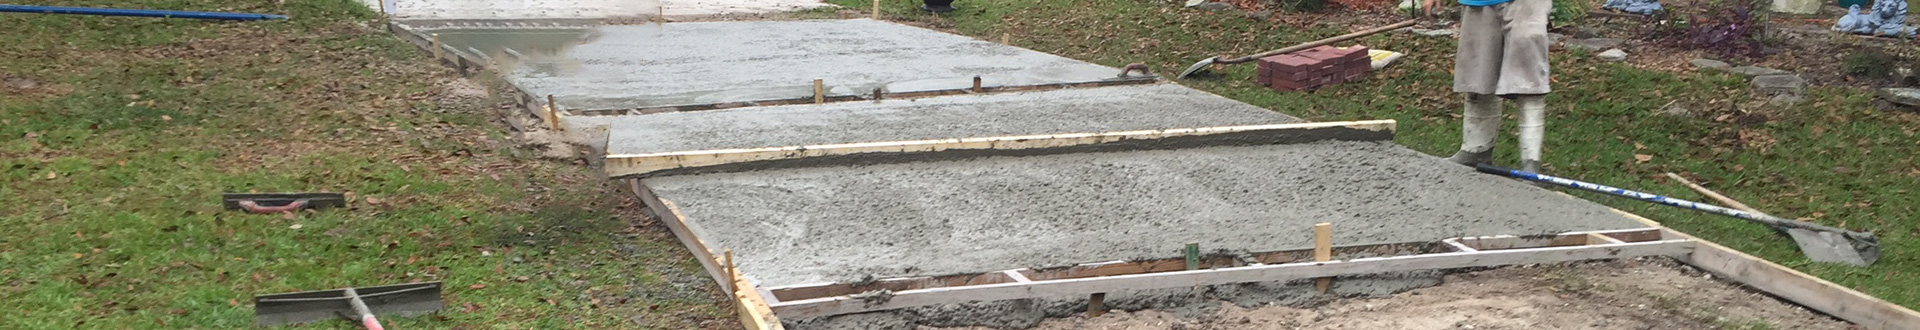 Concrete Sidewalk Project